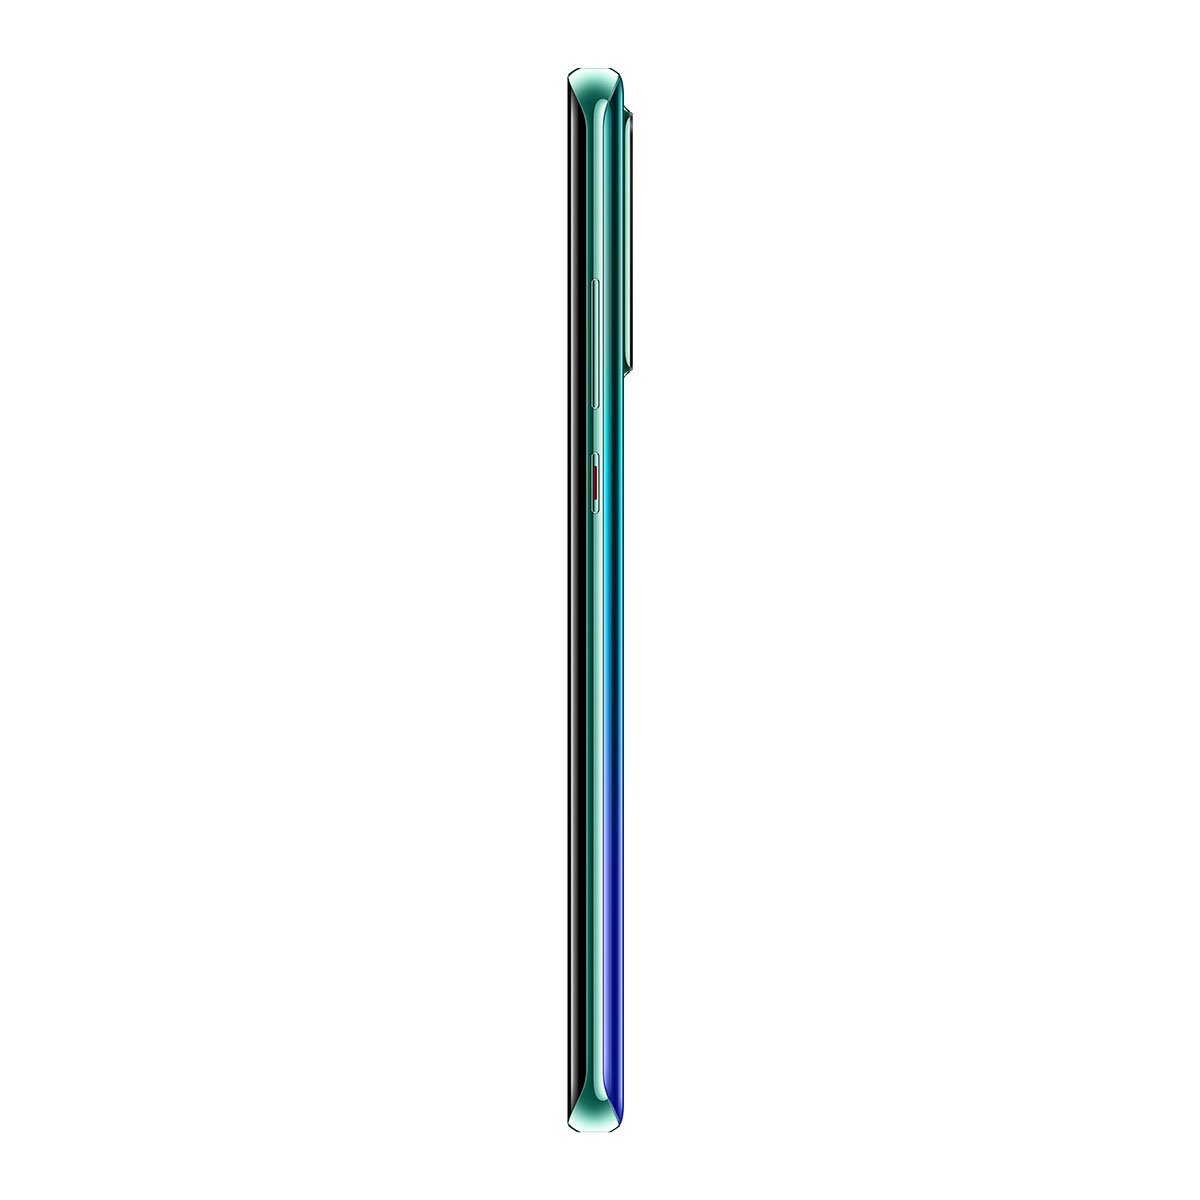 Celular Huawei P30 Pro Vog L04 Color Azul R9 (Telcel)